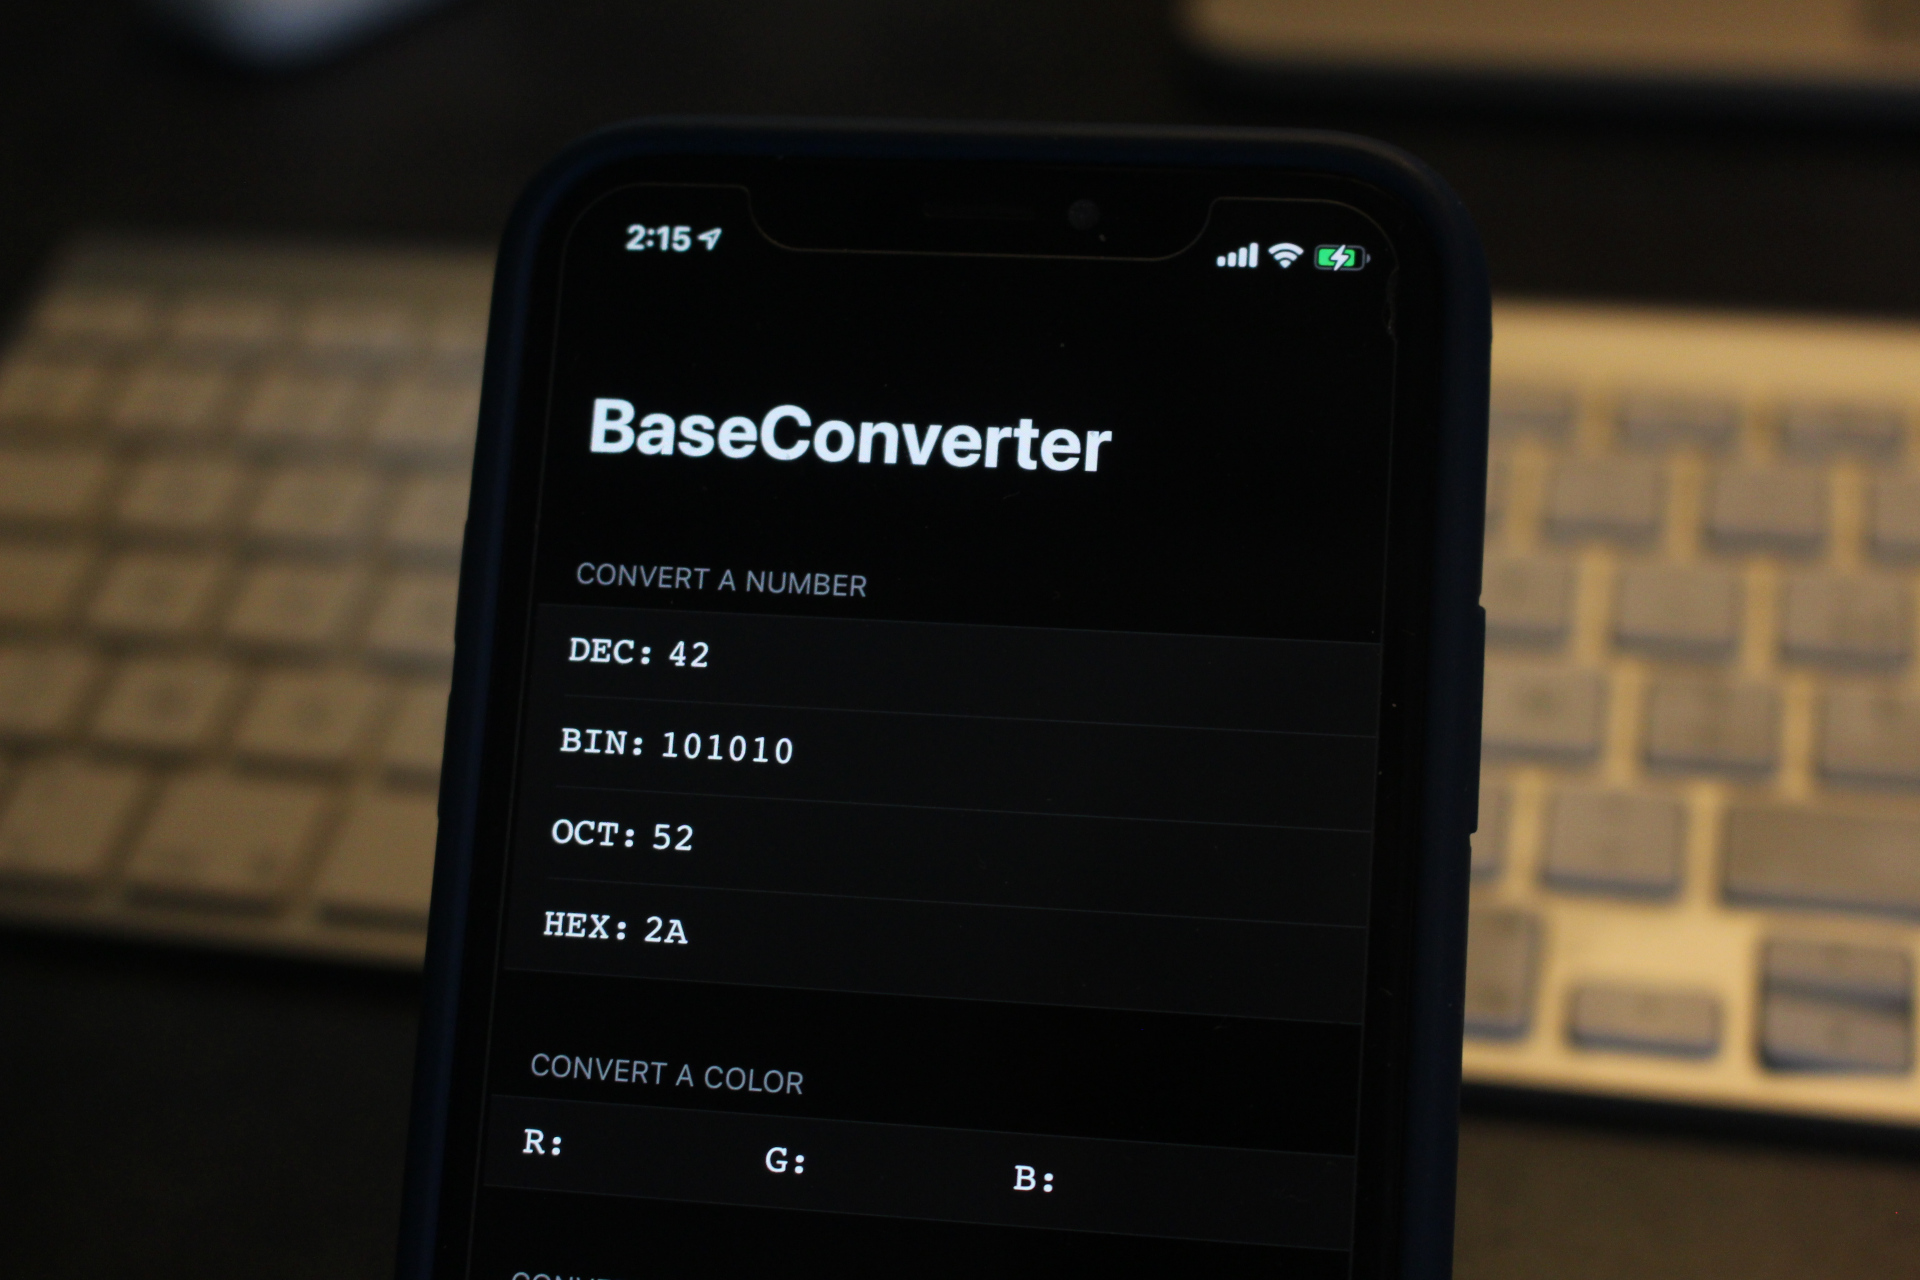 BaseConverter: Converty